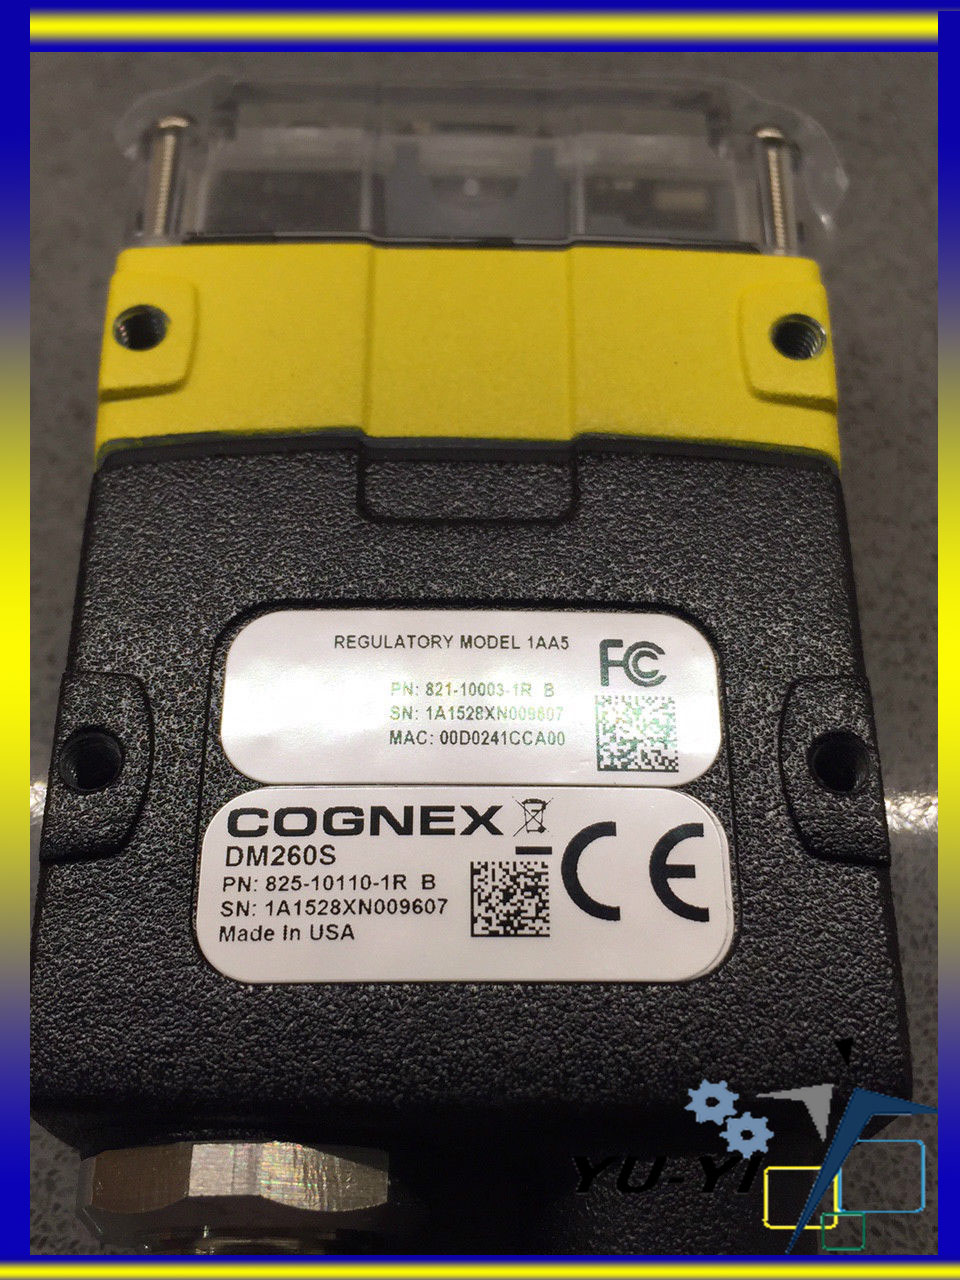 Cognex DM260S Ethernet Fixed Mount Barcode Reader DMR-260S DataMan